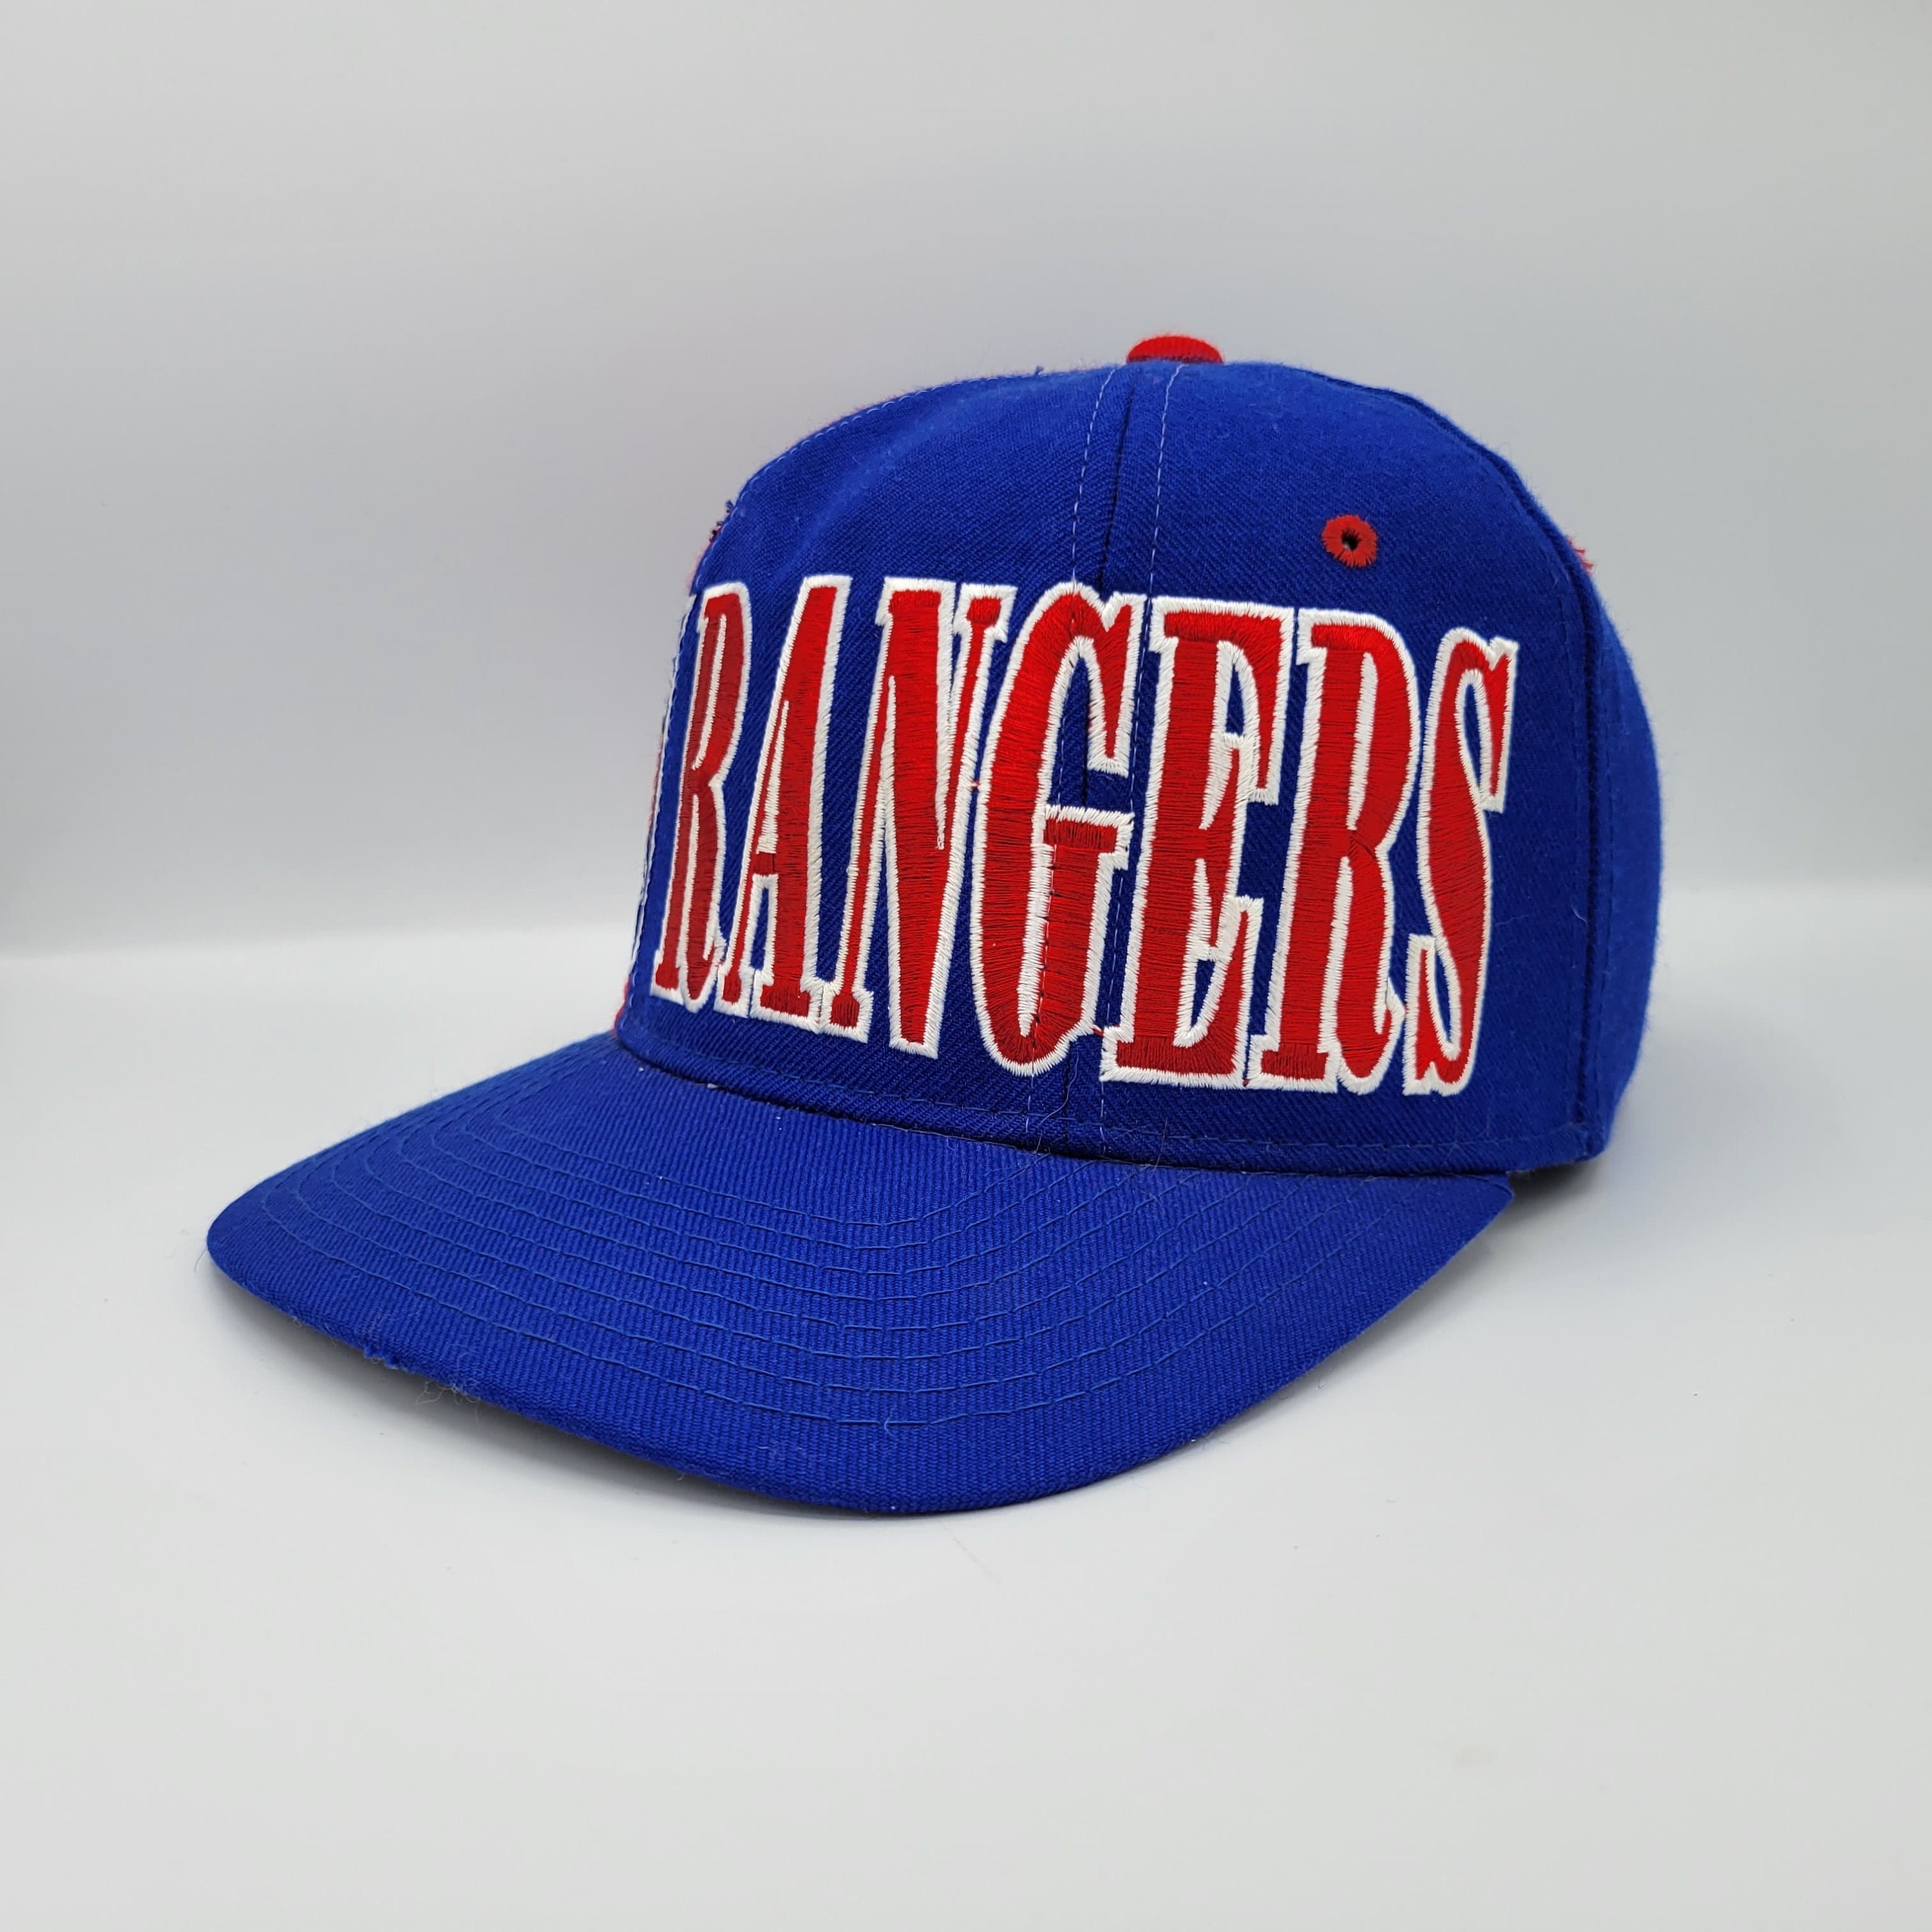 Mitchell & Ness New York Rangers Vintage Snapback Adjustable Hat